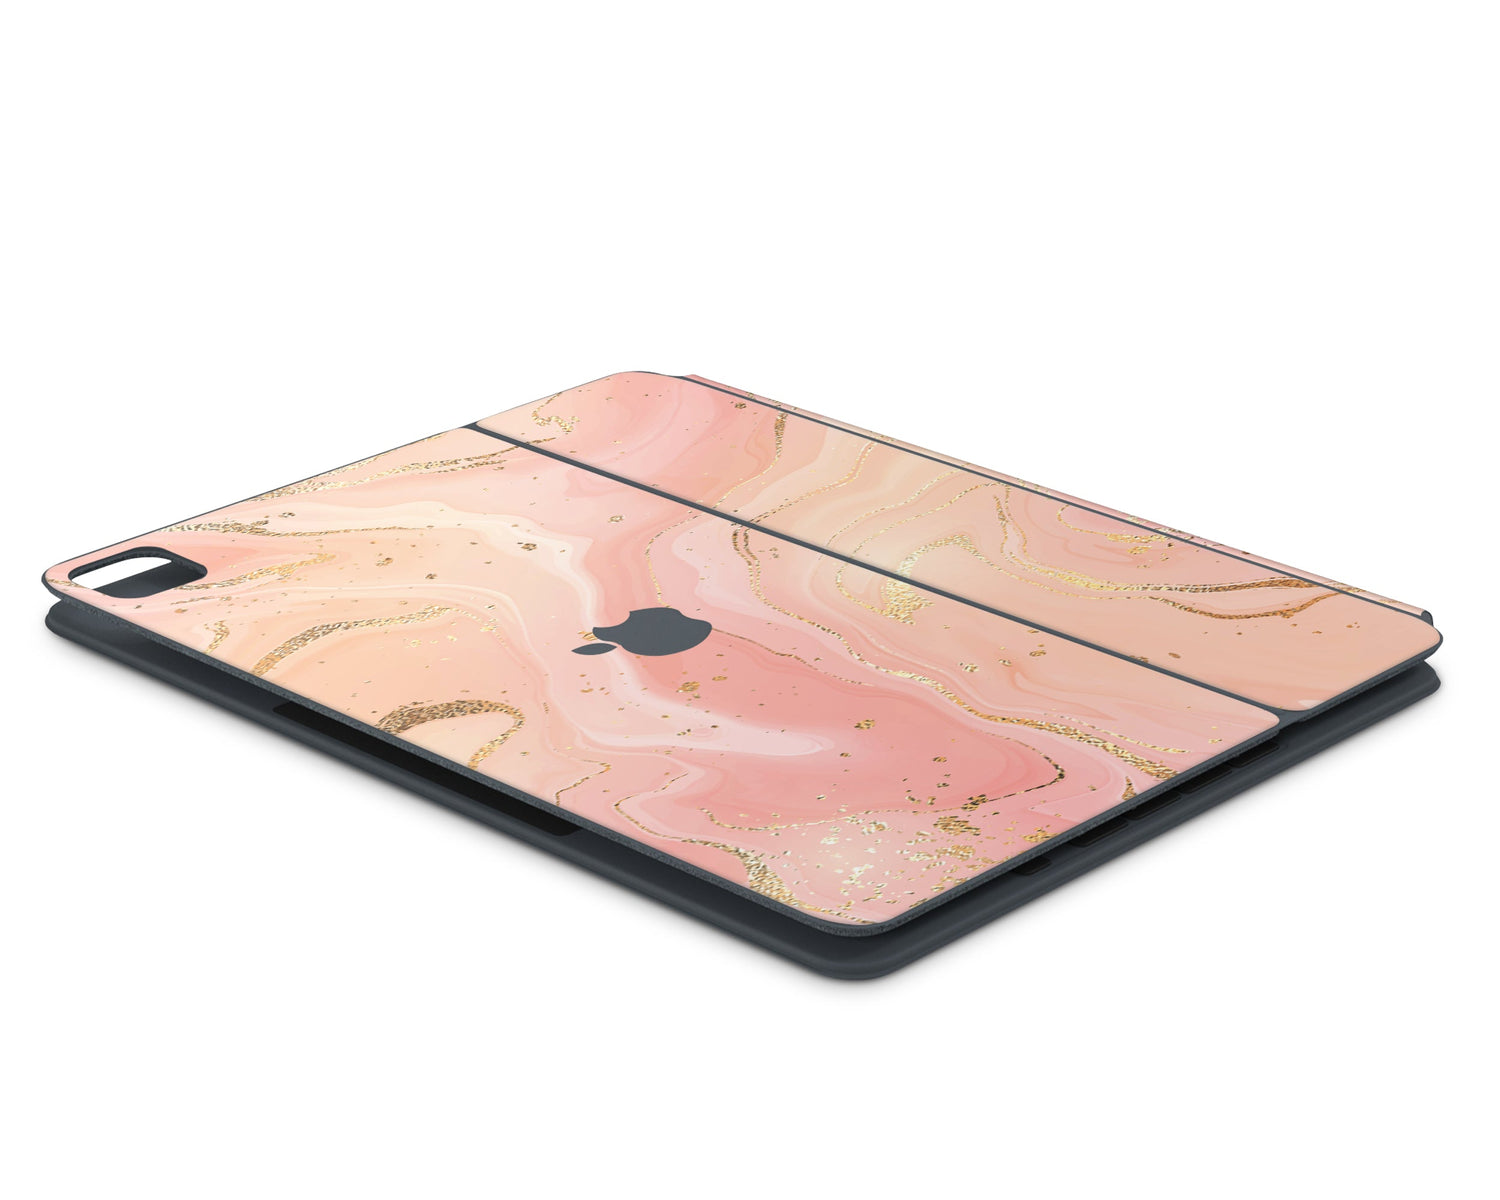 Lux Skins Magic Keyboard Ethereal Peach Pink Marble iPad Pro 11" Skins - Pattern Marble Skin